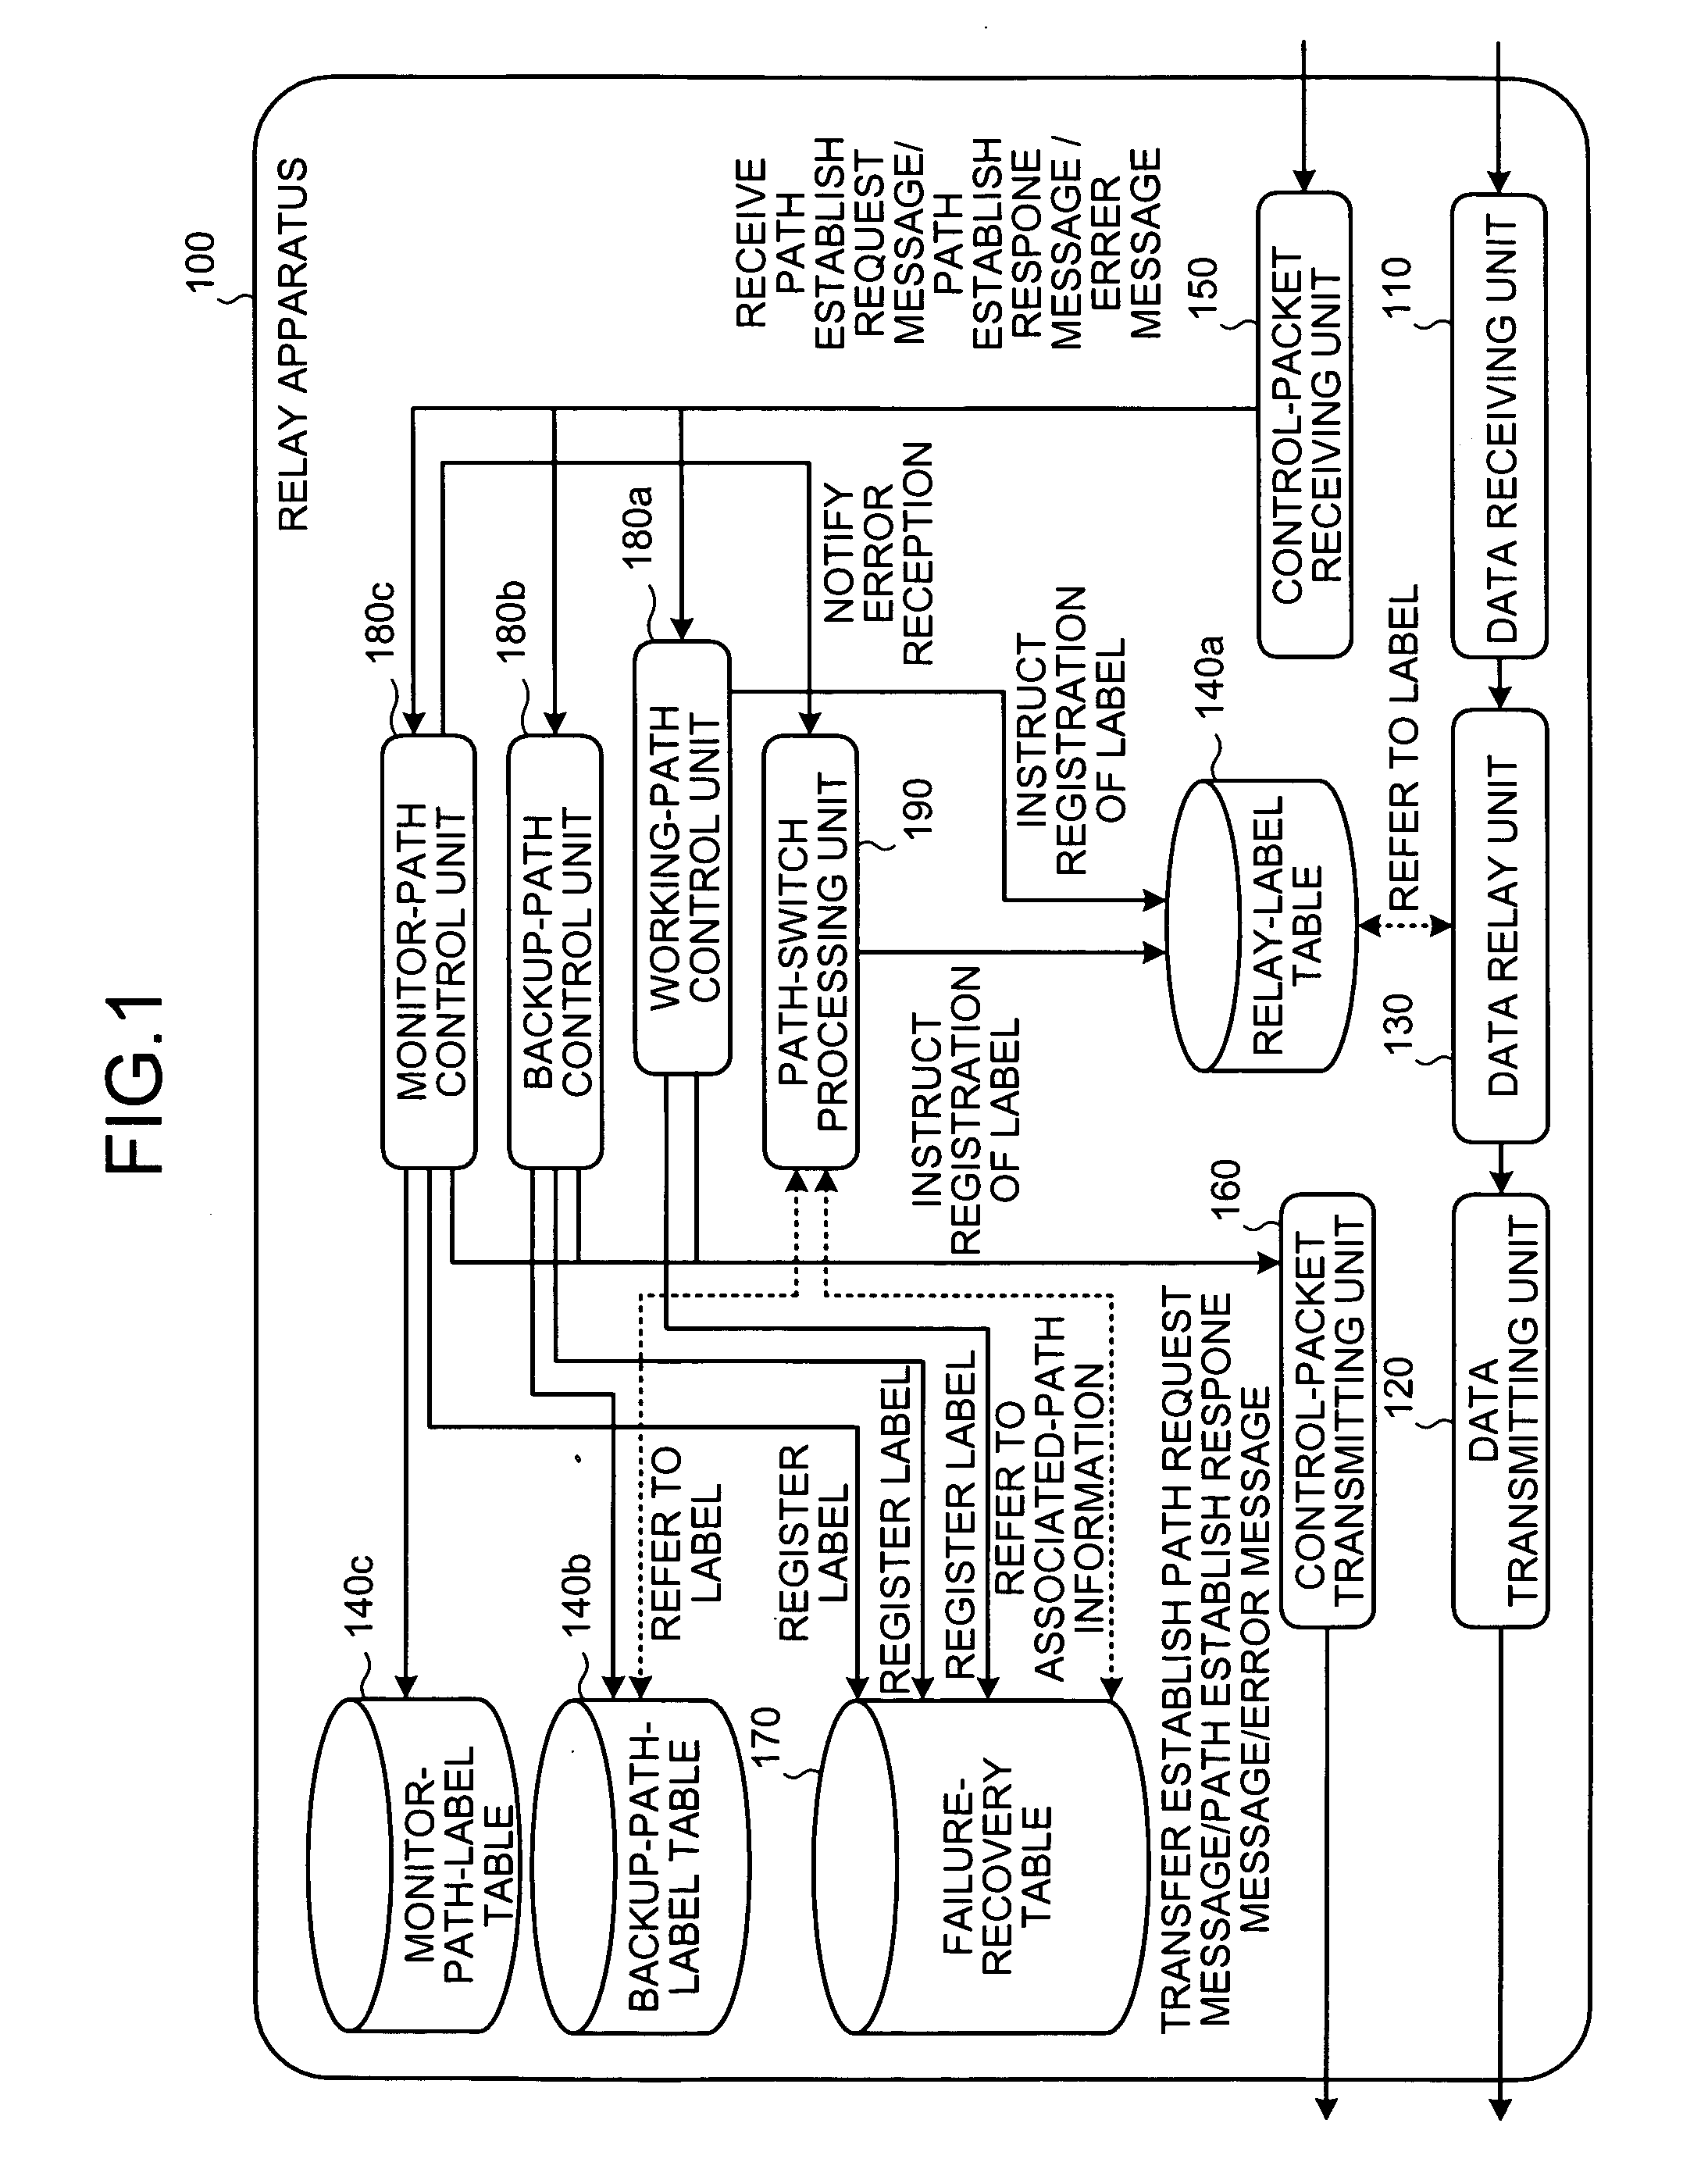 Data relay apparatus and data relay method